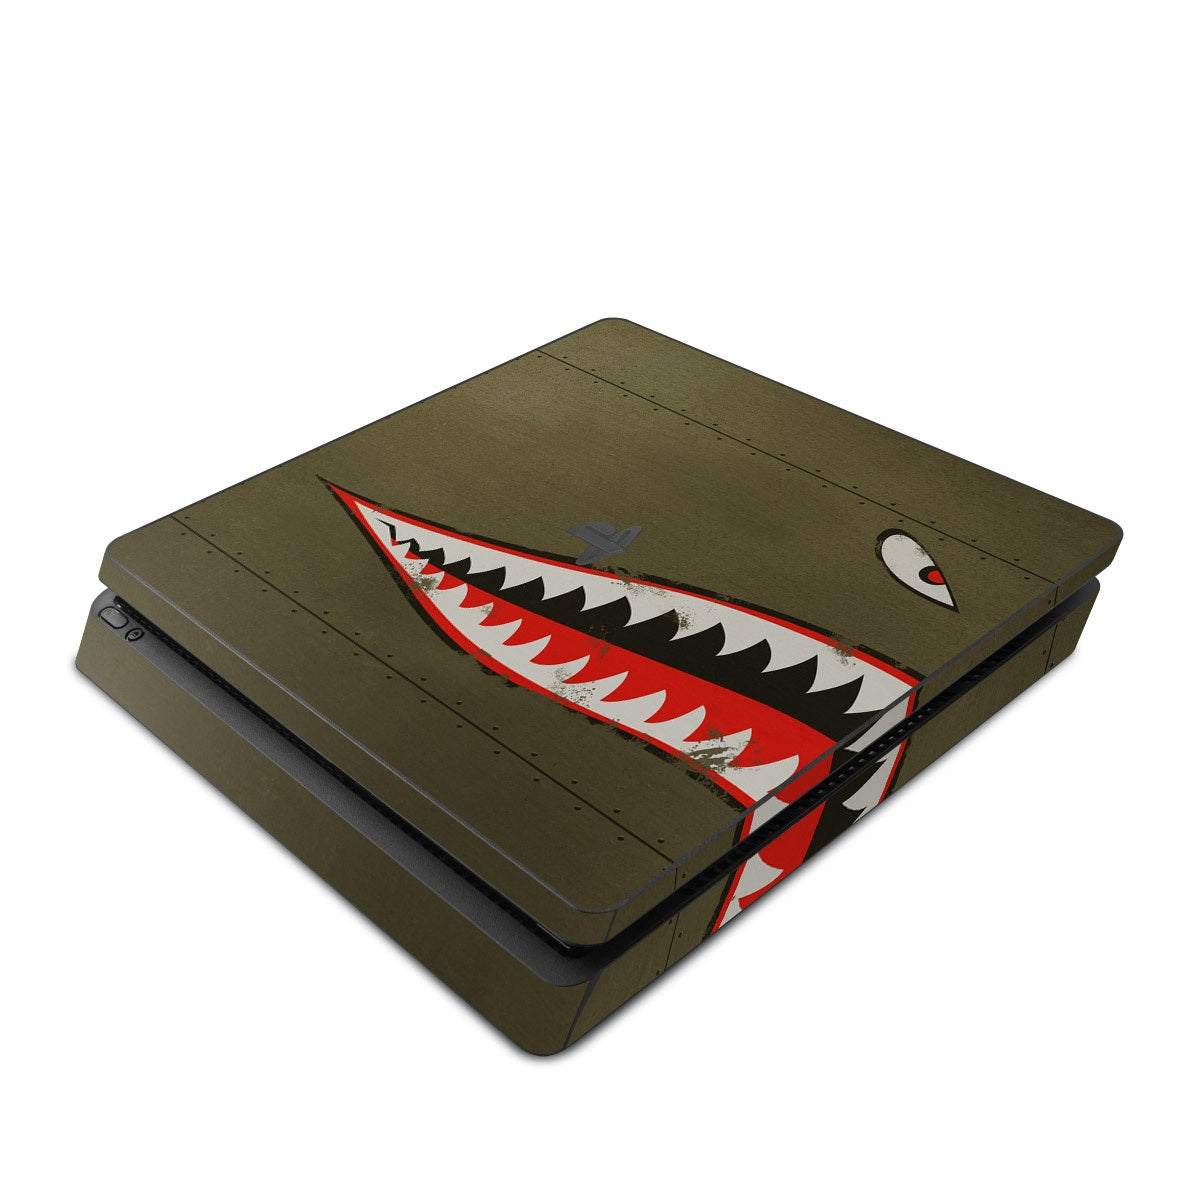 USAF Shark - Sony PS4 Slim Skin